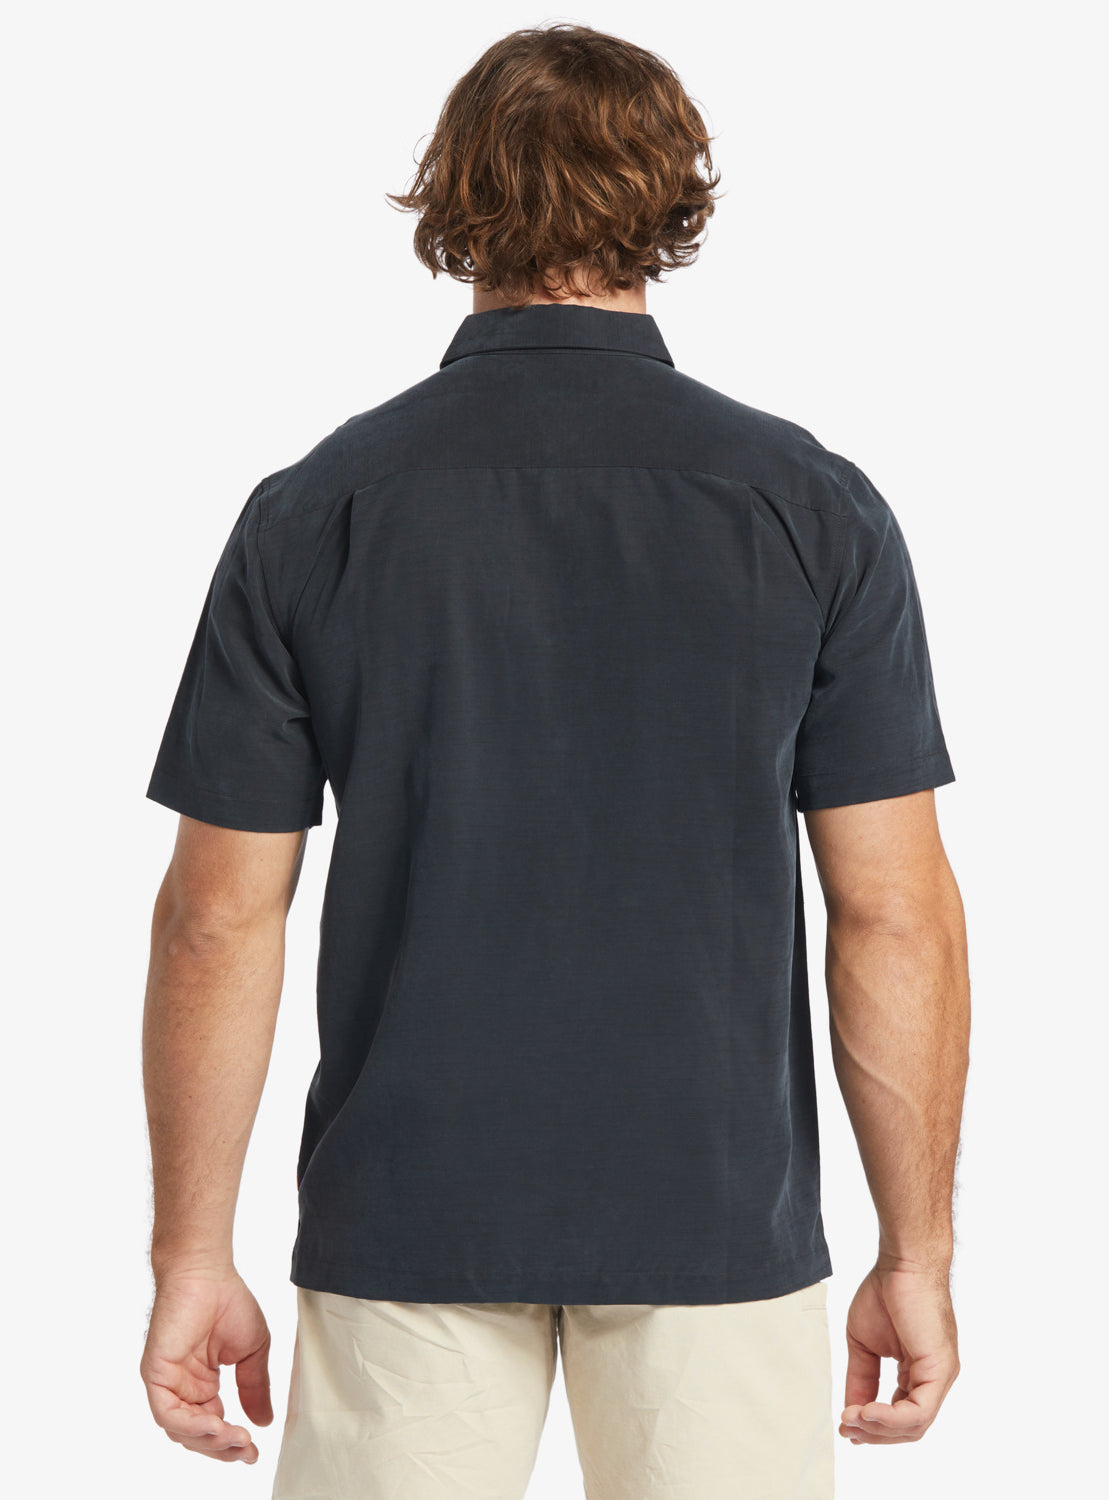 Quiksilver: WatermanTahiti Palms Premium Shirt